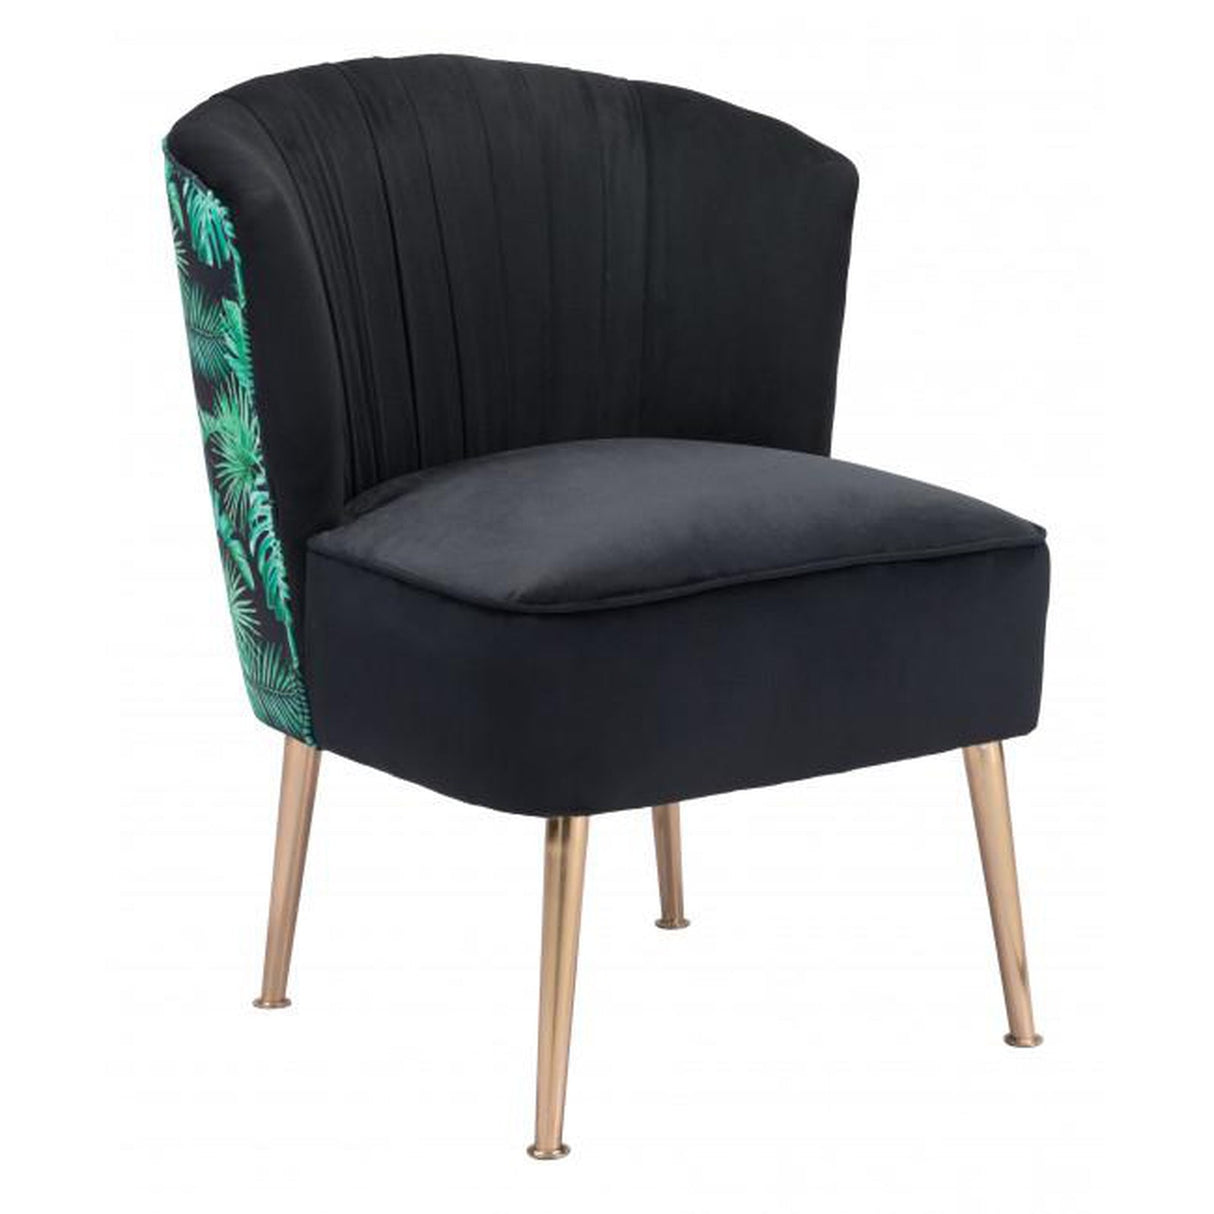 Zuo Tonya Accent Chair Black, Gold & Tropical Print